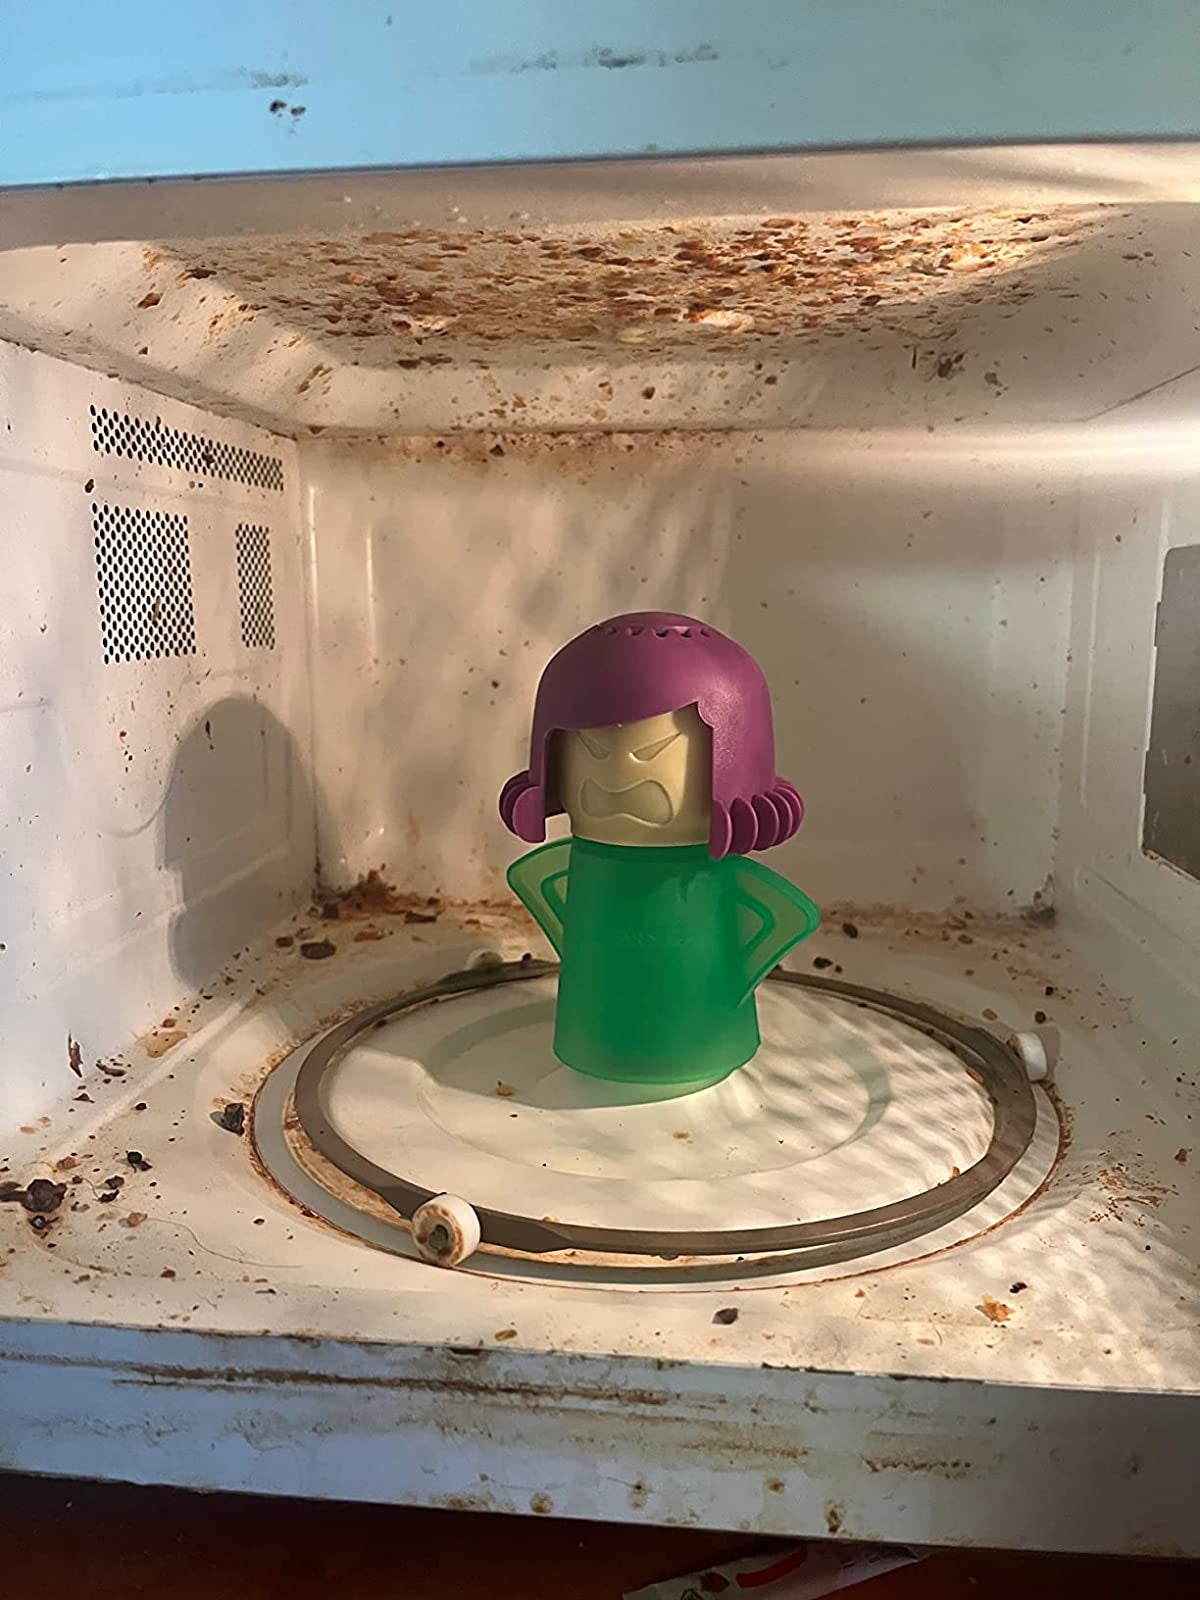  Angry Mom Microwave Cleaner - Angry Mad Creay Mama